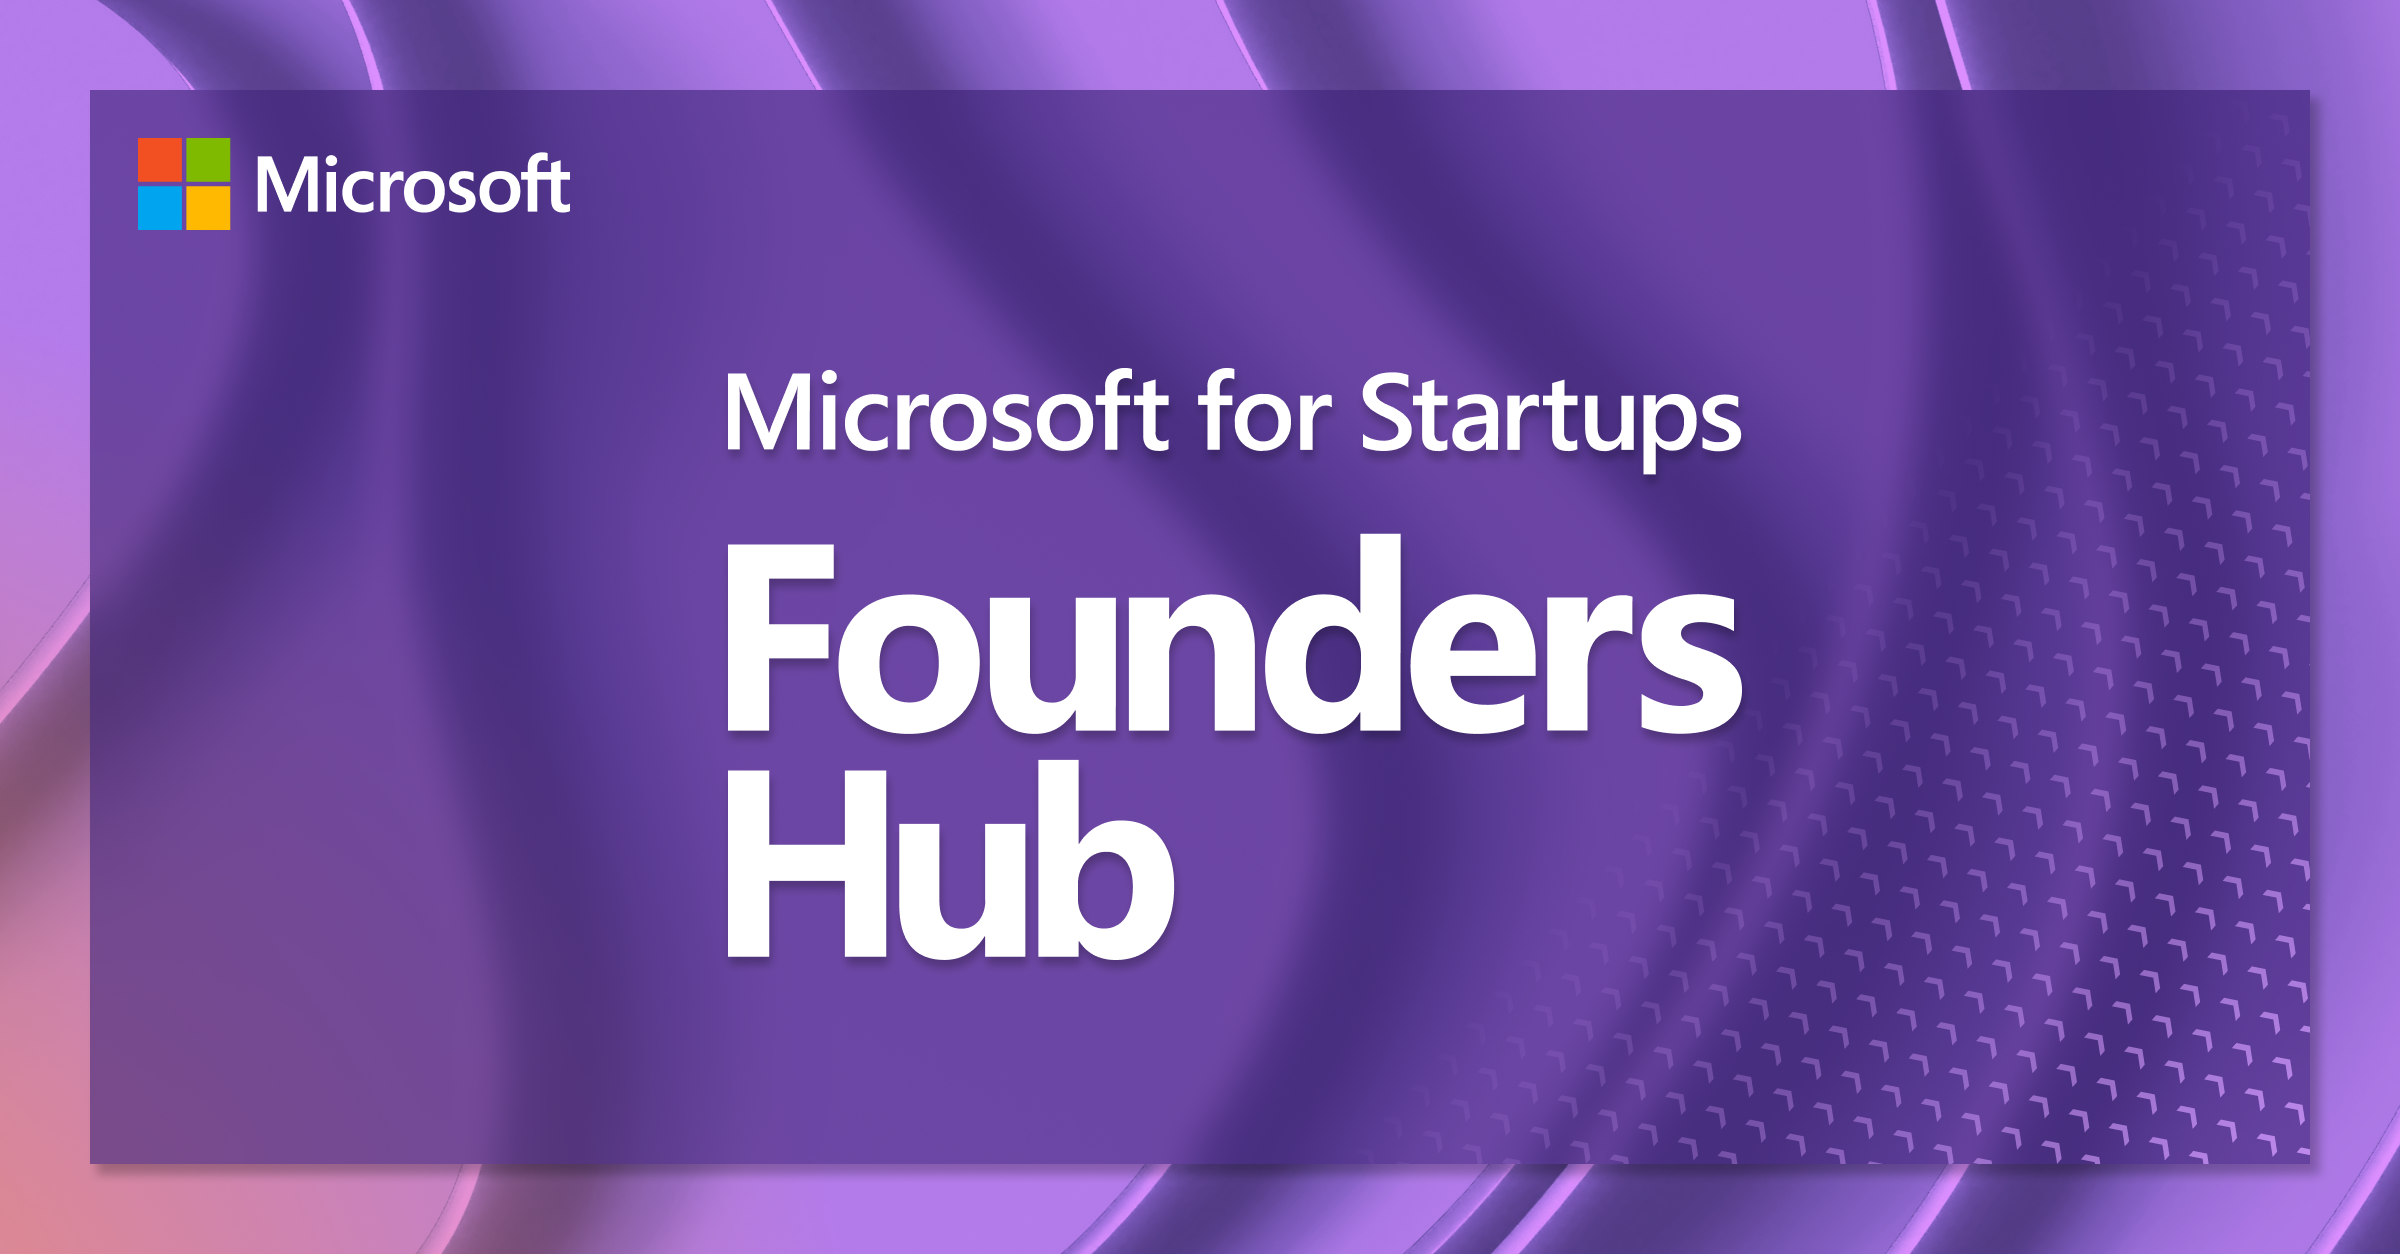 Founders Hub